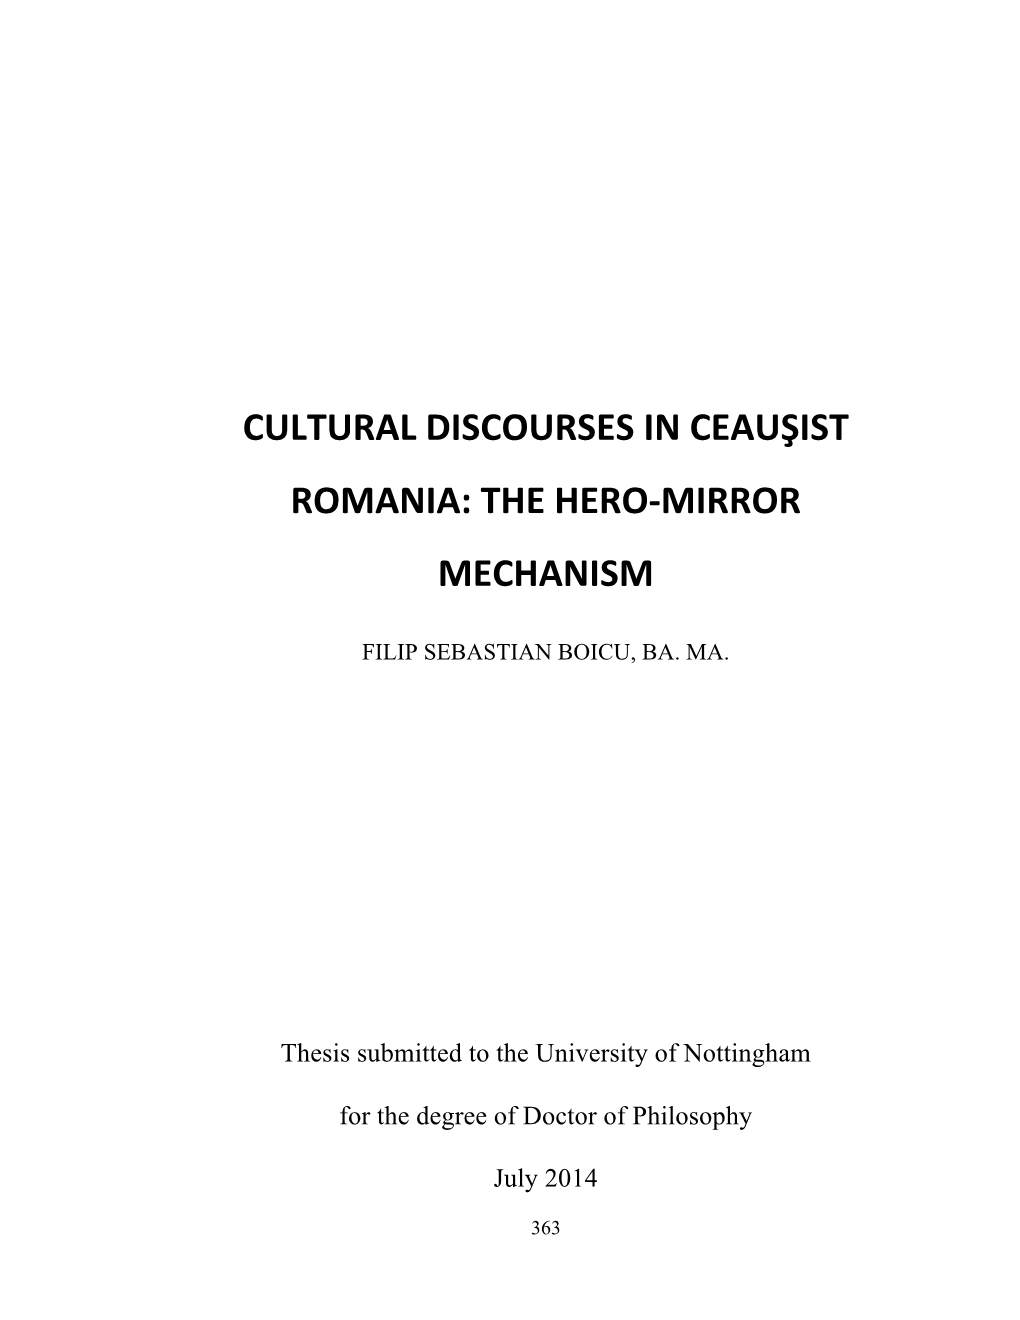 Boicu, Filip Sebastian (2014) Cultural Discourses in Ceauşist Romania